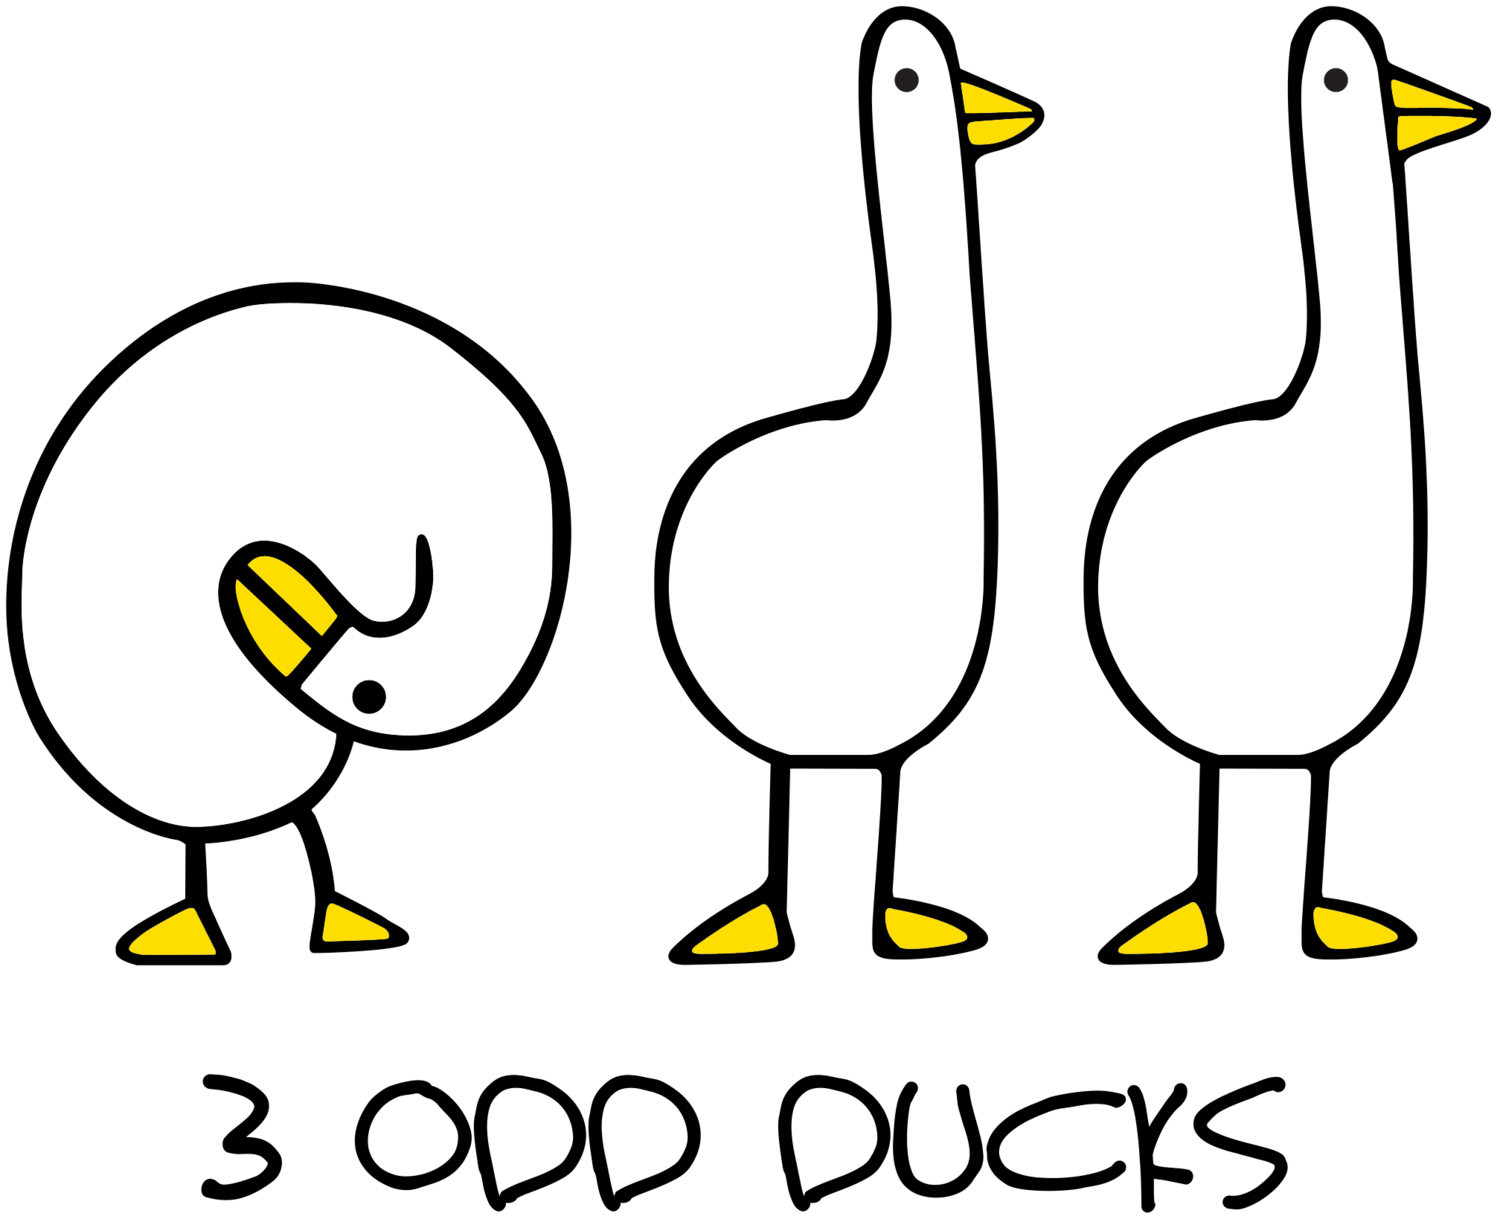 3 odd ducks logo.png